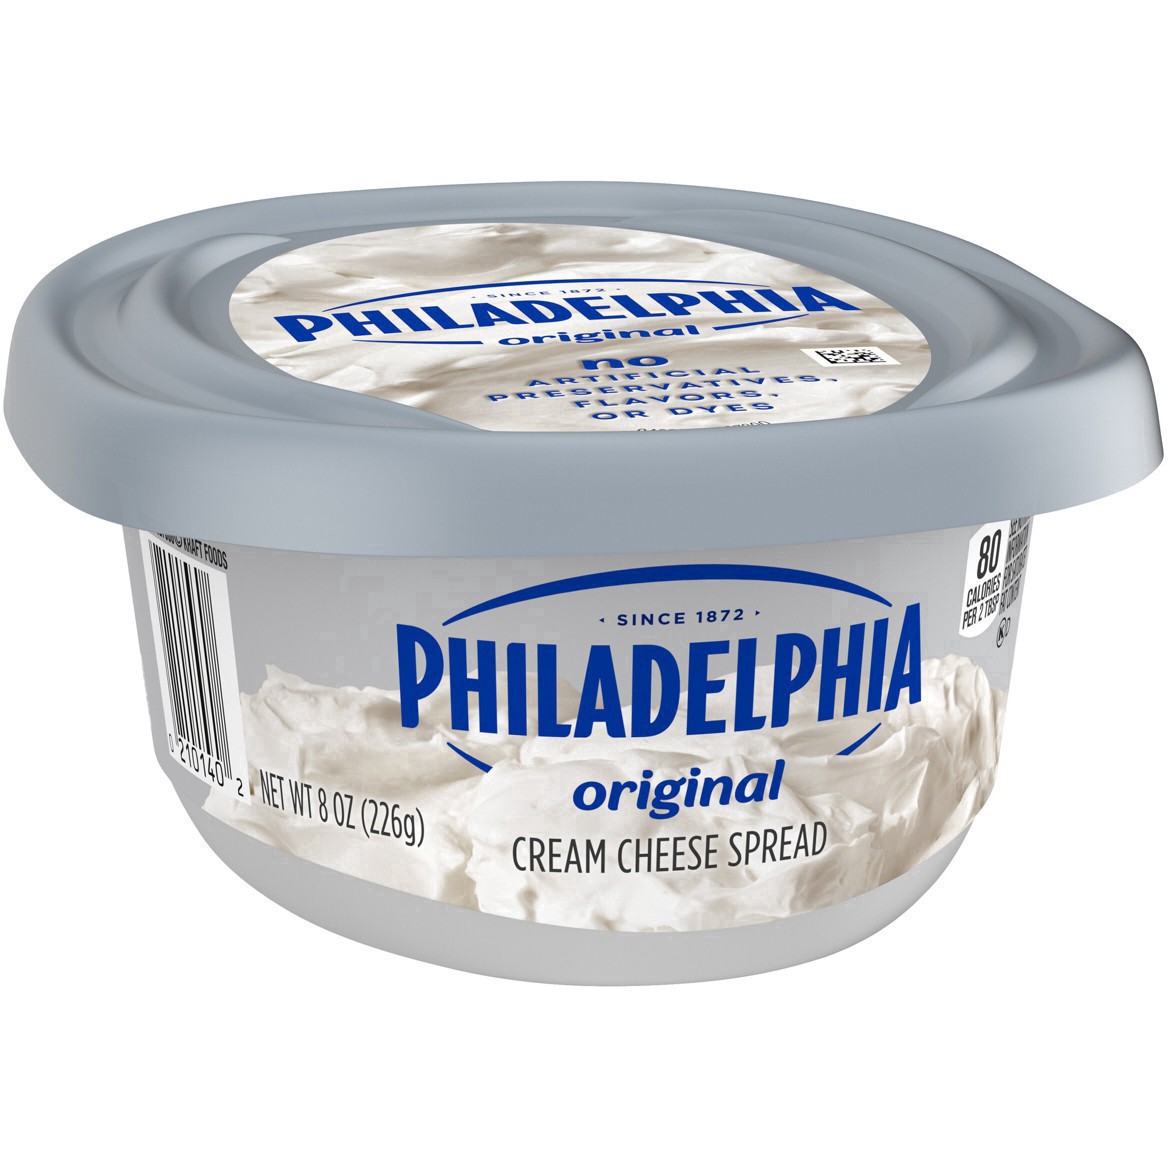 slide 20 of 67, Philadelphia Original Cream Cheese Spread, 8 oz